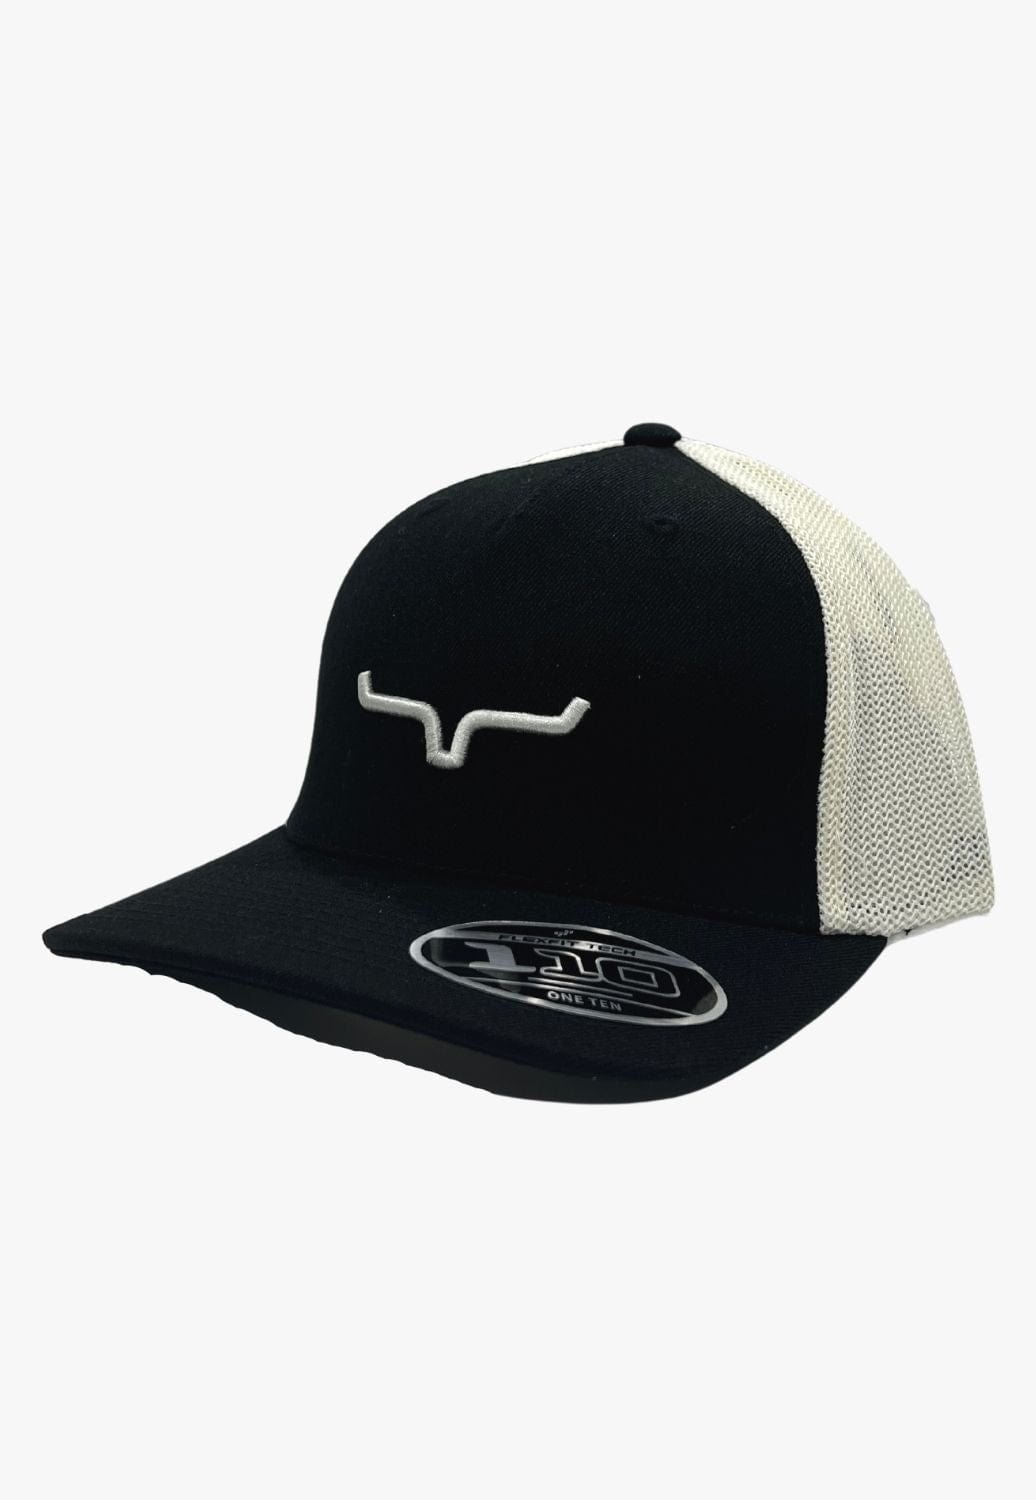 Kimes Ranch HATS - Caps Black Kimes G&T 110 Cap